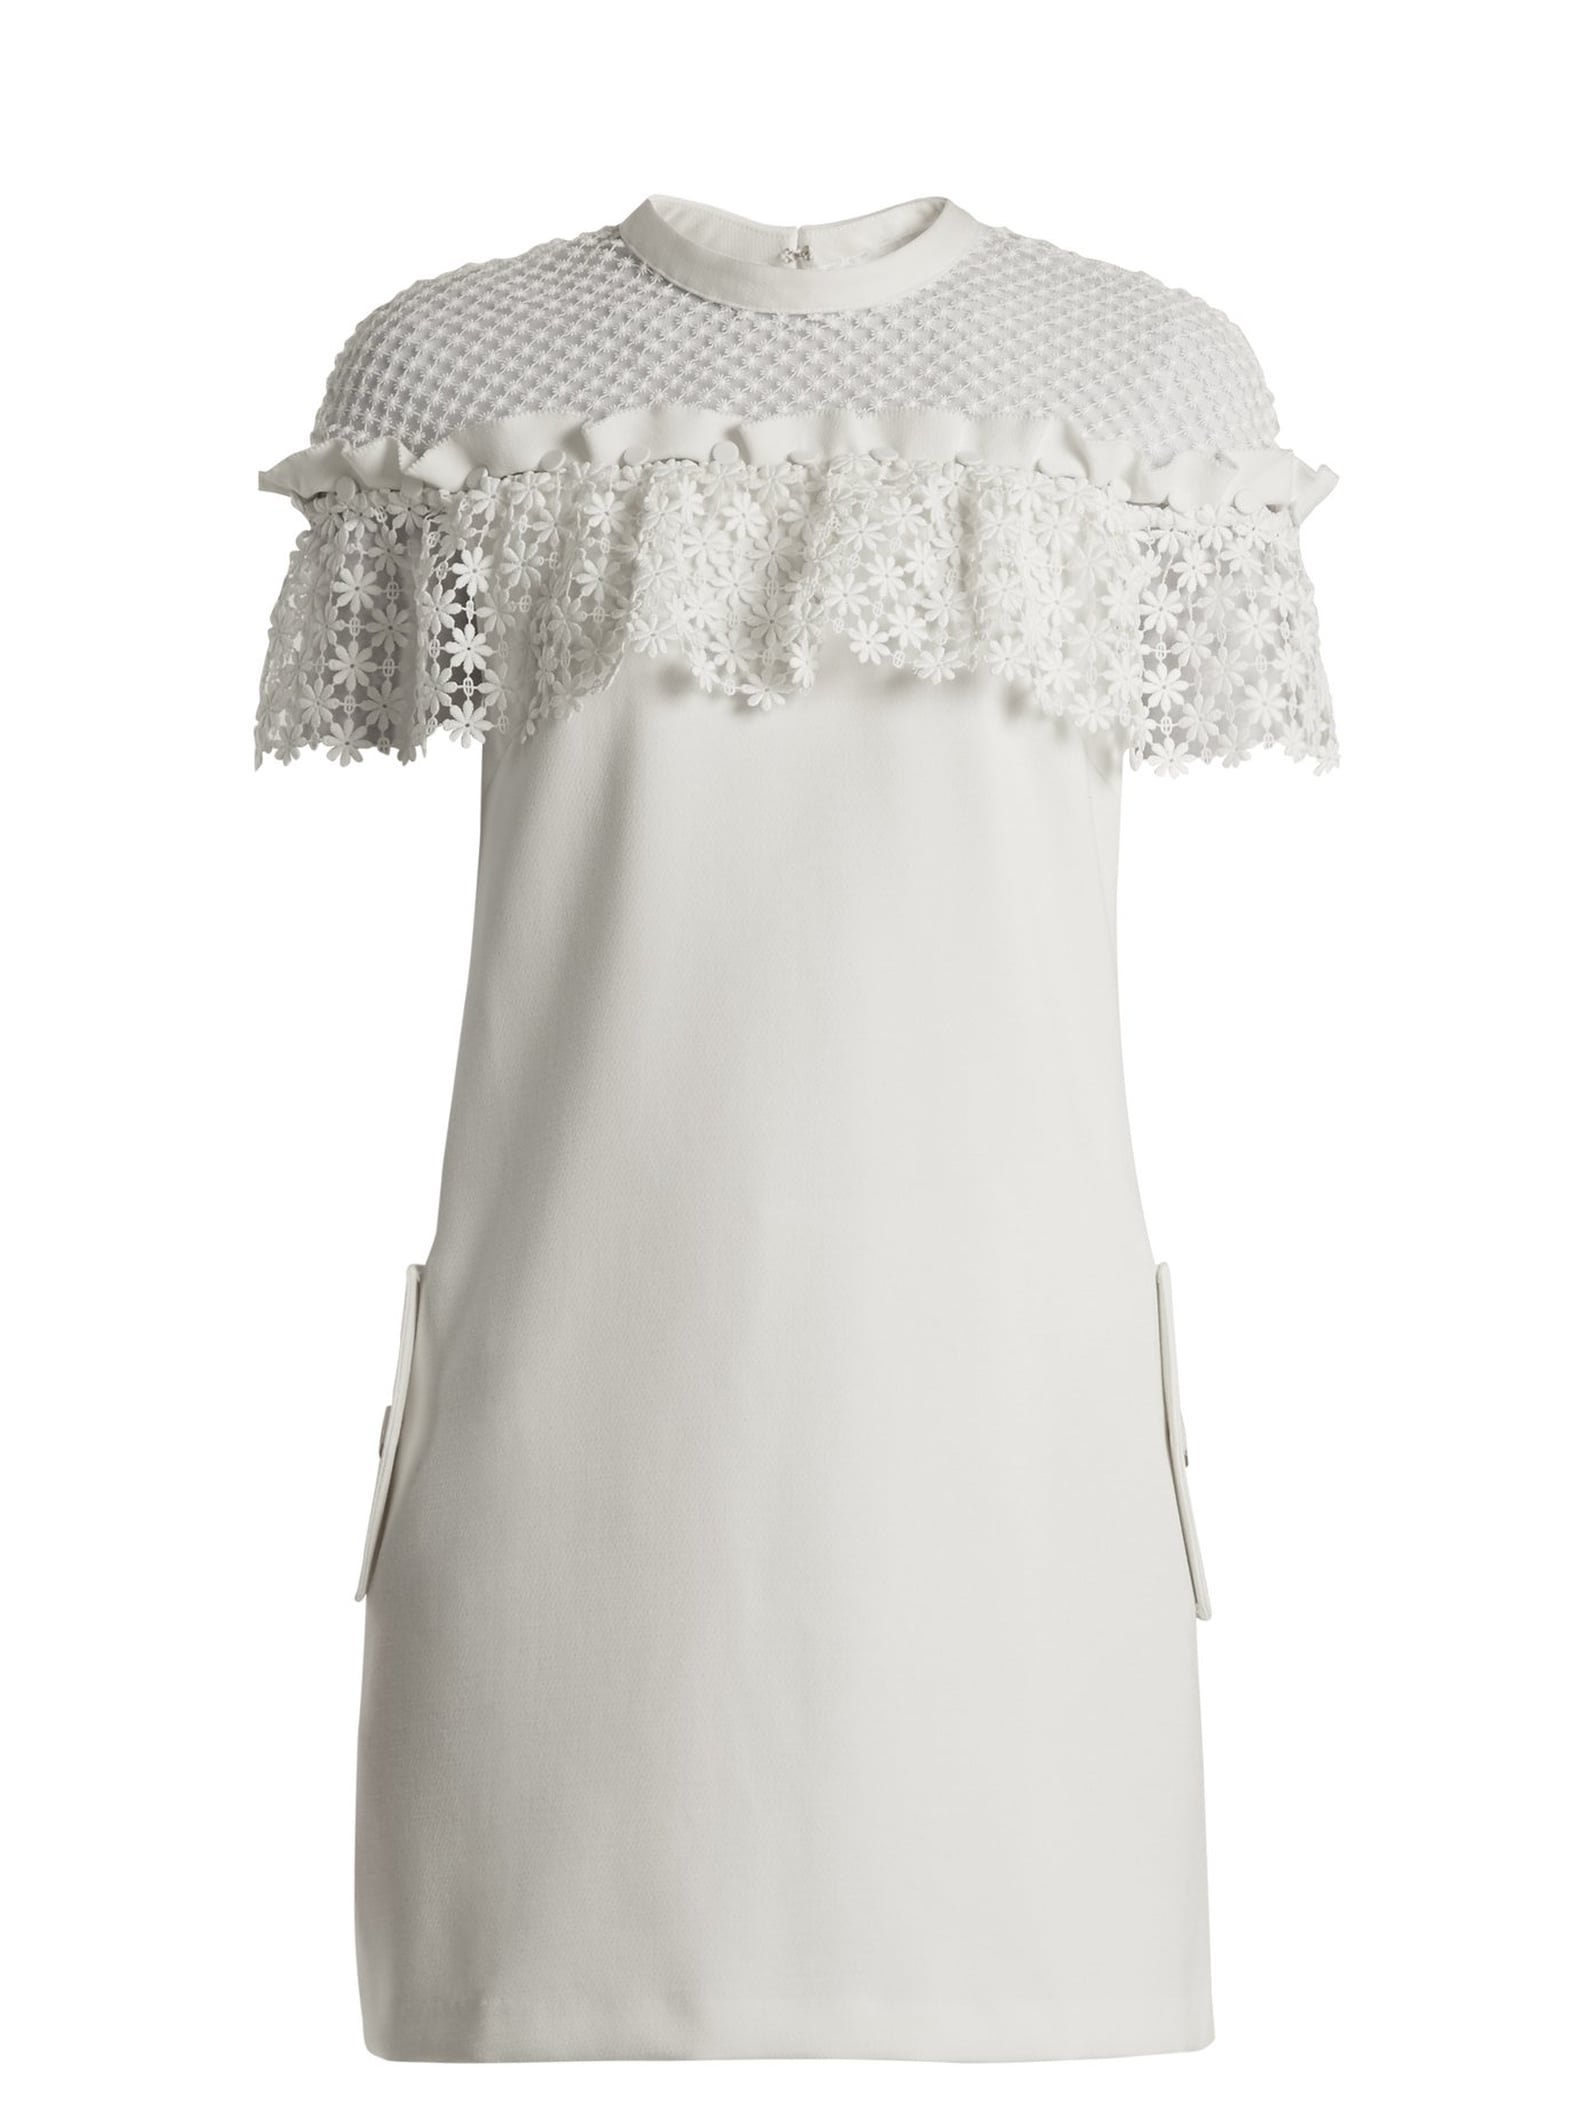 Meghan Markle's Givenchy Cream Dress | POPSUGAR Fashion